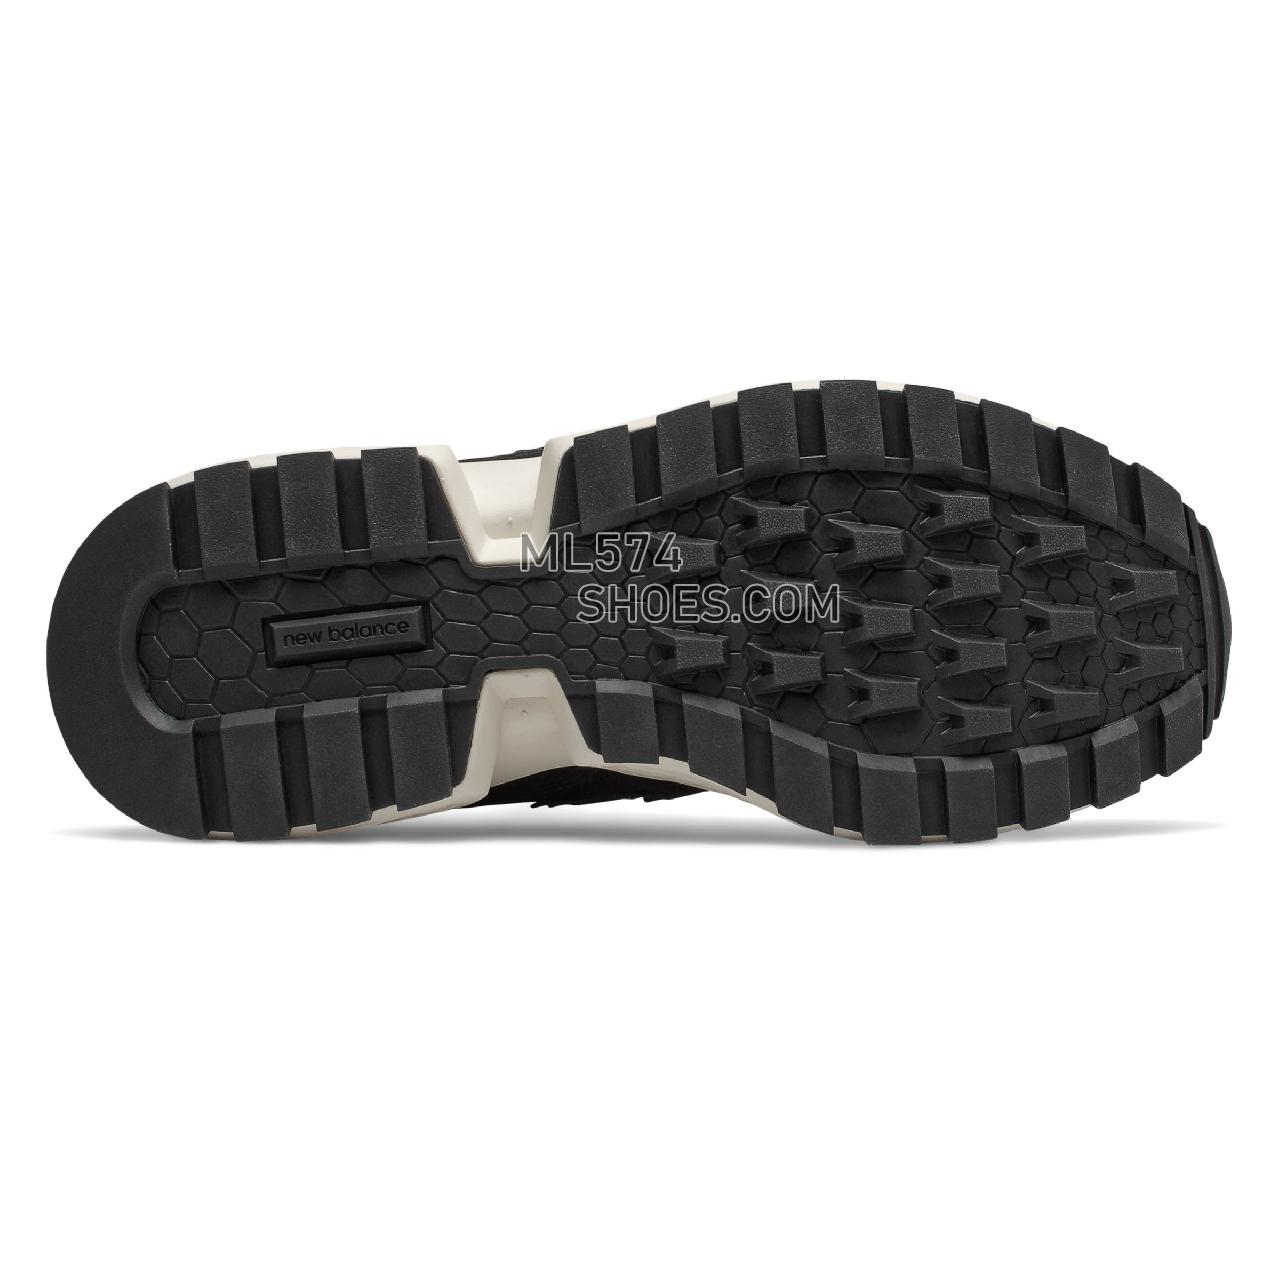 New Balance Fresh Foam 574 Sport - Women's Sport Style Sneakers - Black with Sea Salt - WS574ATH